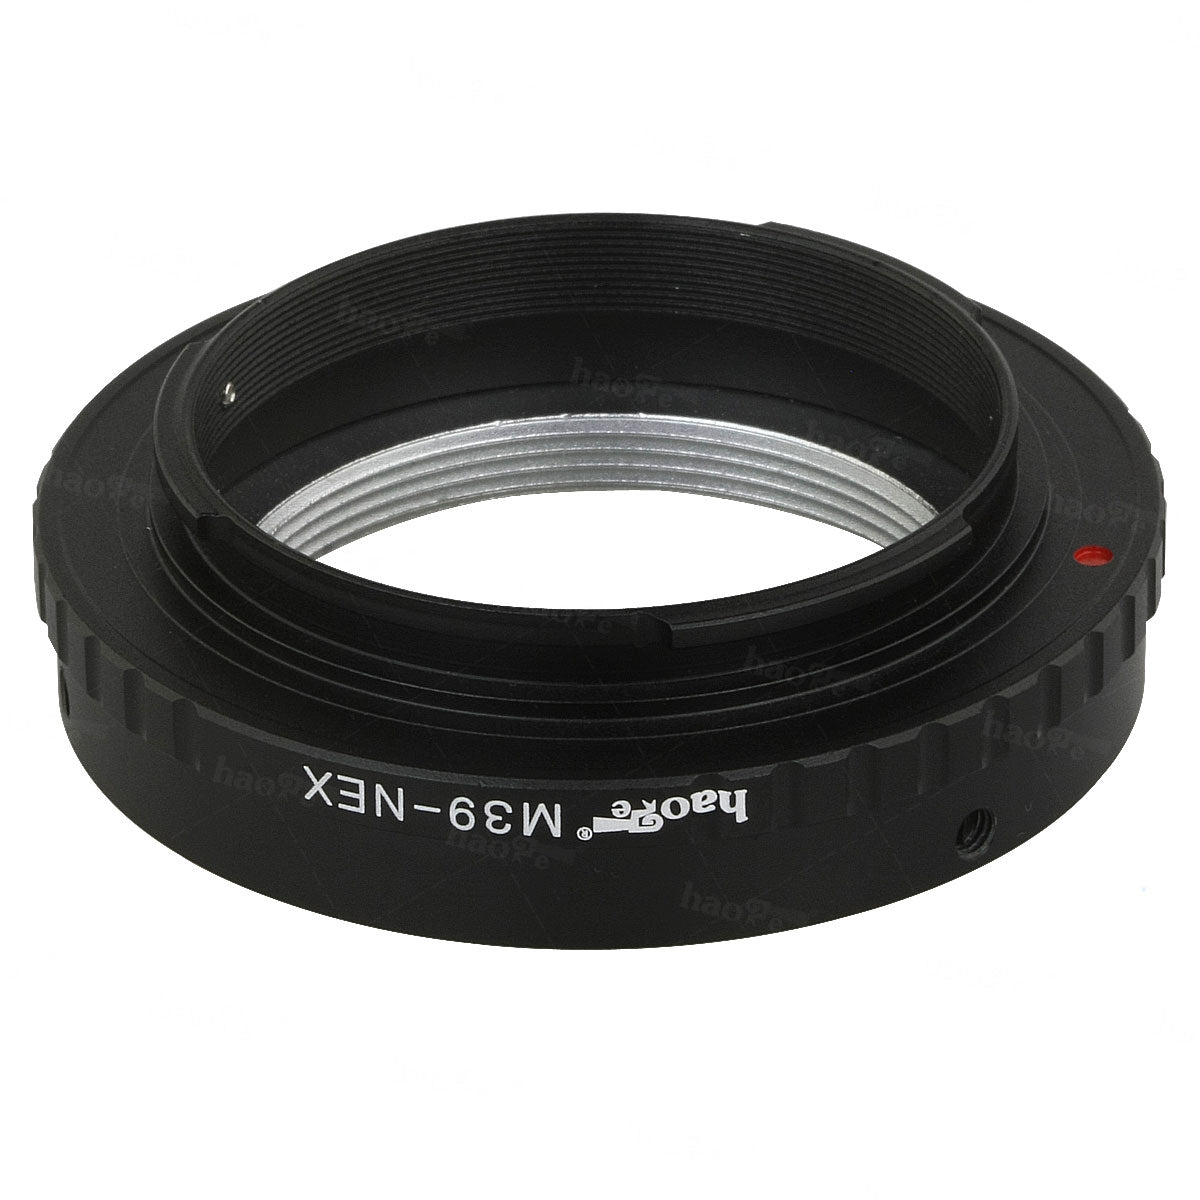 Haoge Lens Mount Adapter for 39mm M39 Mount Lens to Sony E-mount NEX Camera such as NEX-3, NEX-5, NEX-5N, NEX-7, NEX-7N, NEX-C3, NEX-F3, a6300, a6000, a5000, a3500, a3000, NEX-VG10, VG20 Aluminum